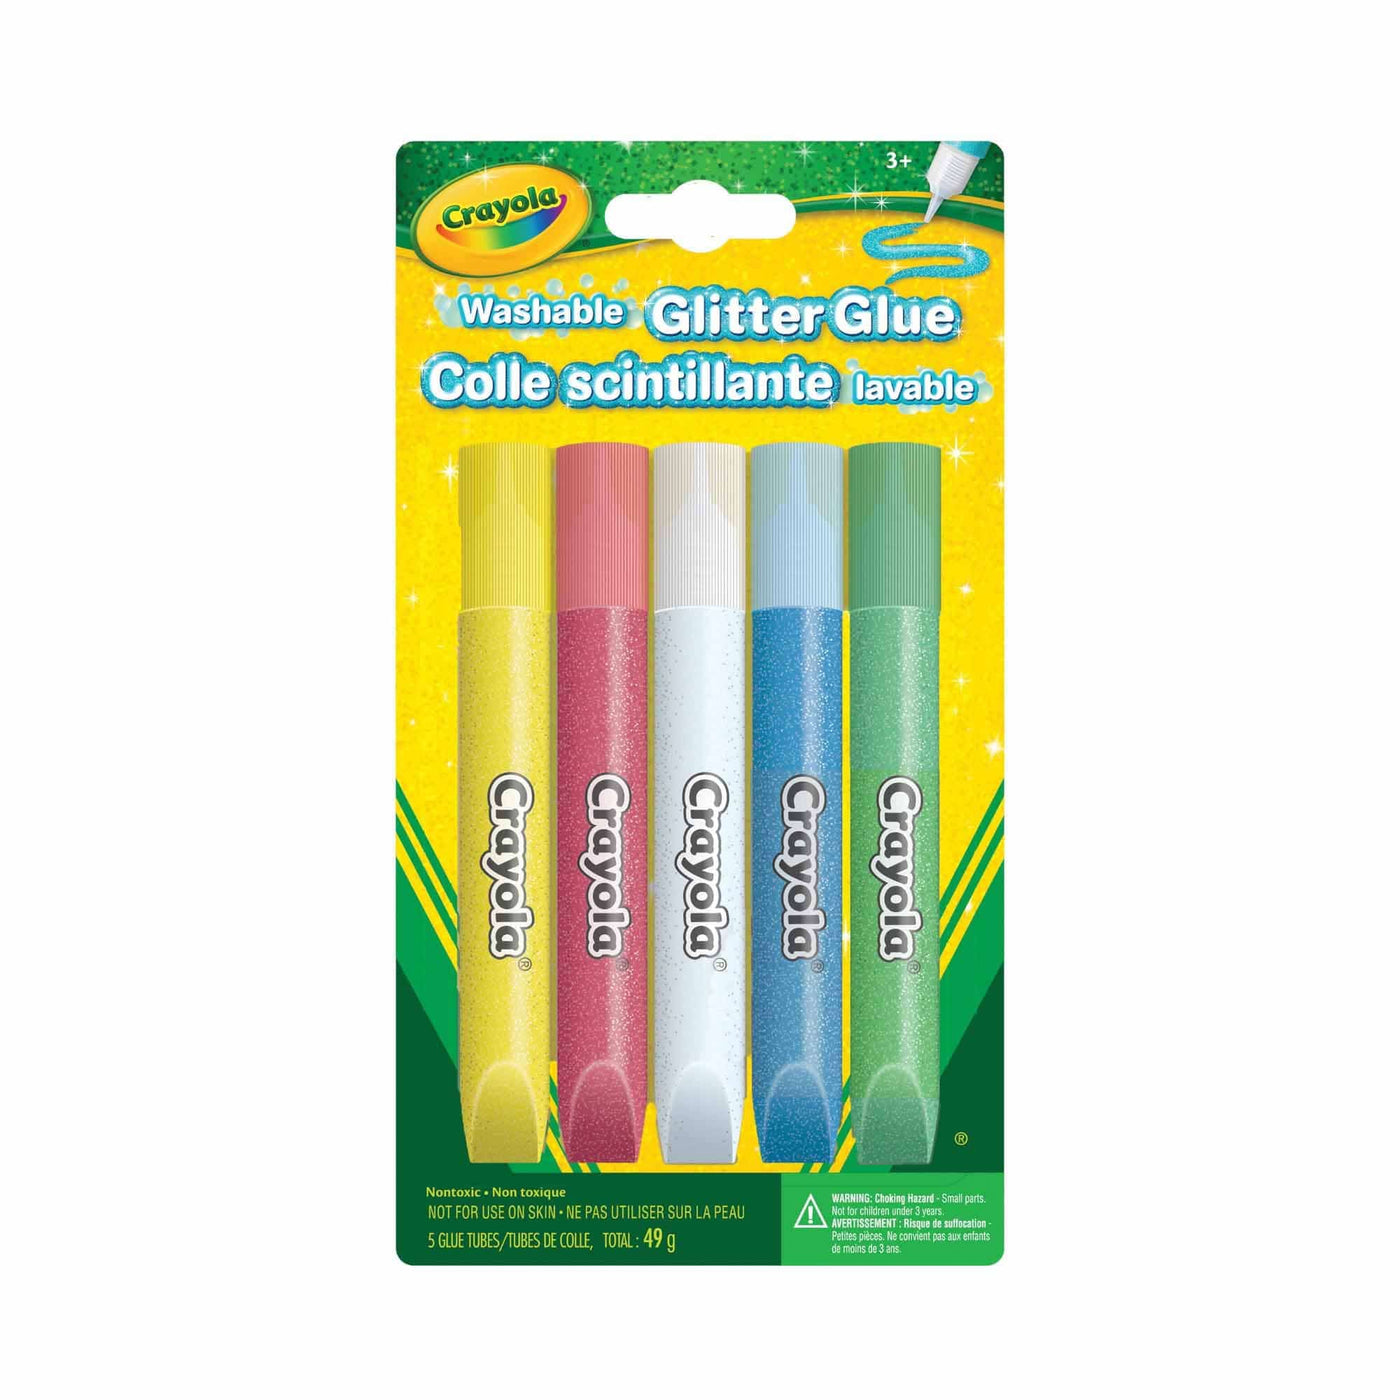 Washable Glitter Glue, 5 Count | Crayola by Crayola, USA Art & Craft